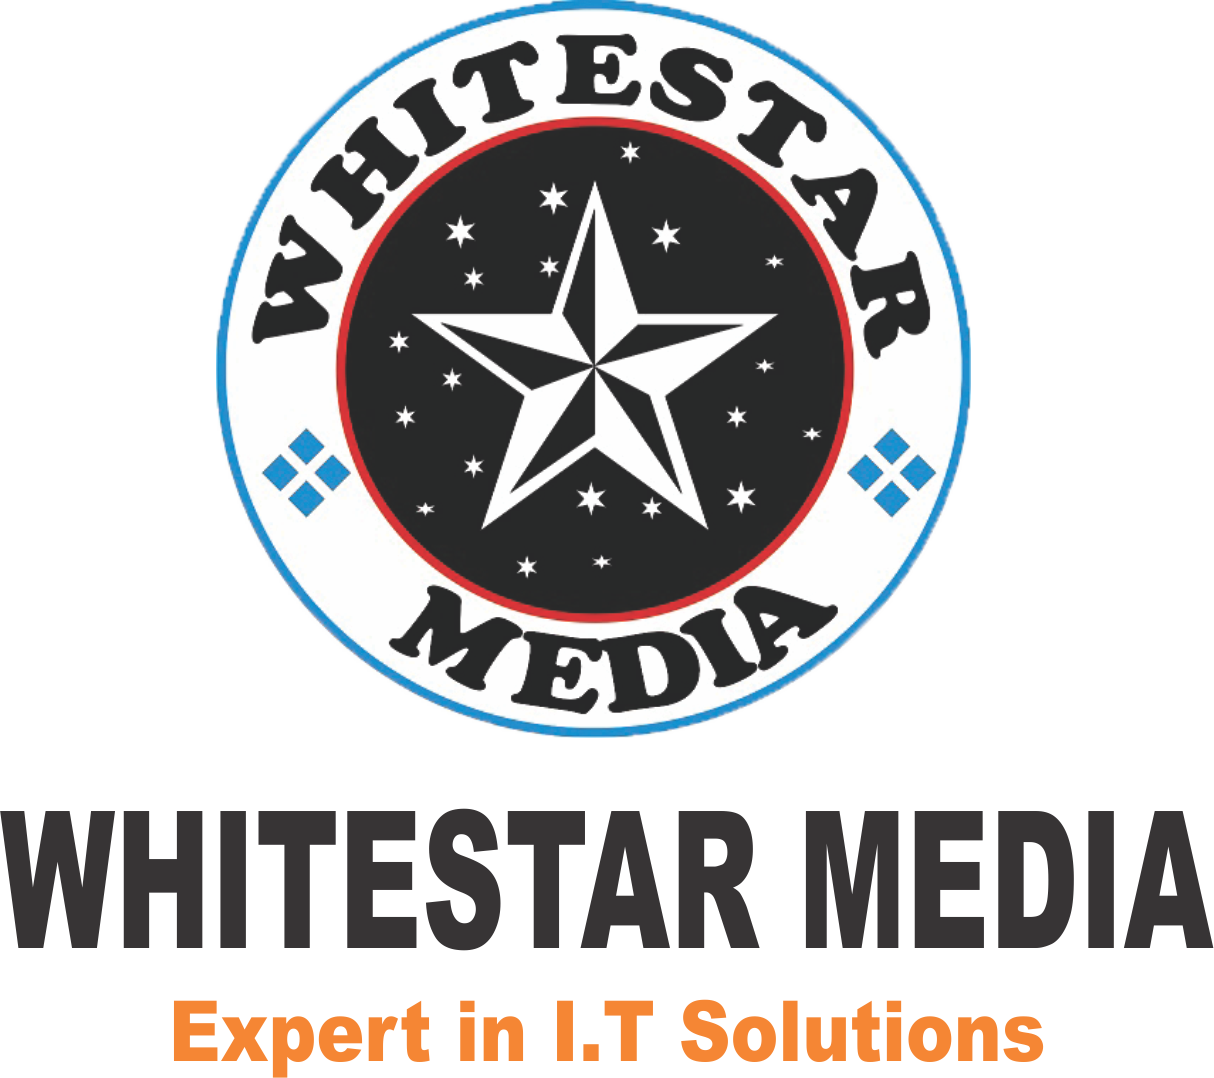 Whitestar Media